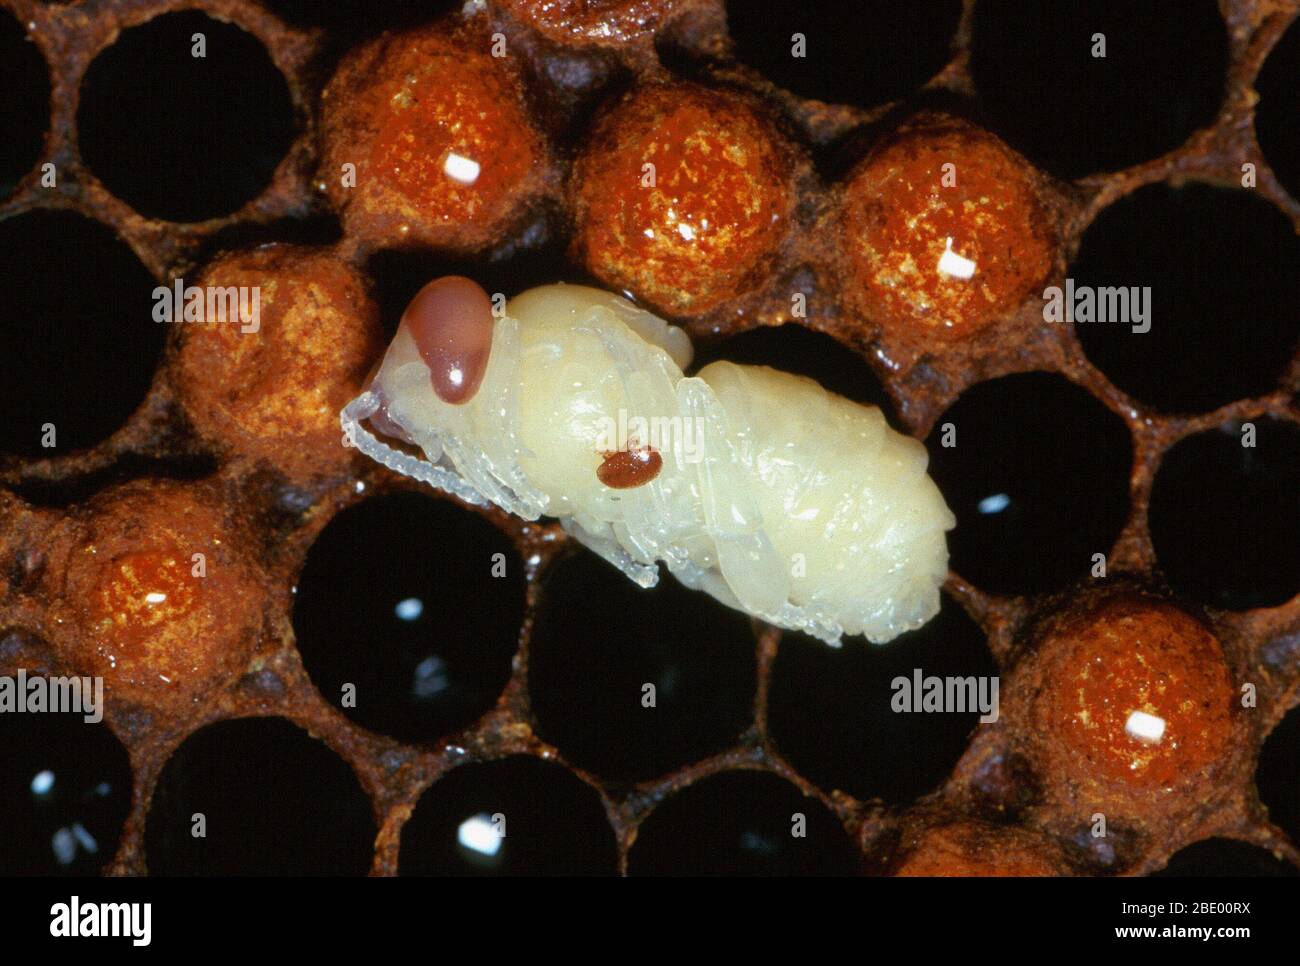 Varroa mite on honeybee pupa Stock Photo